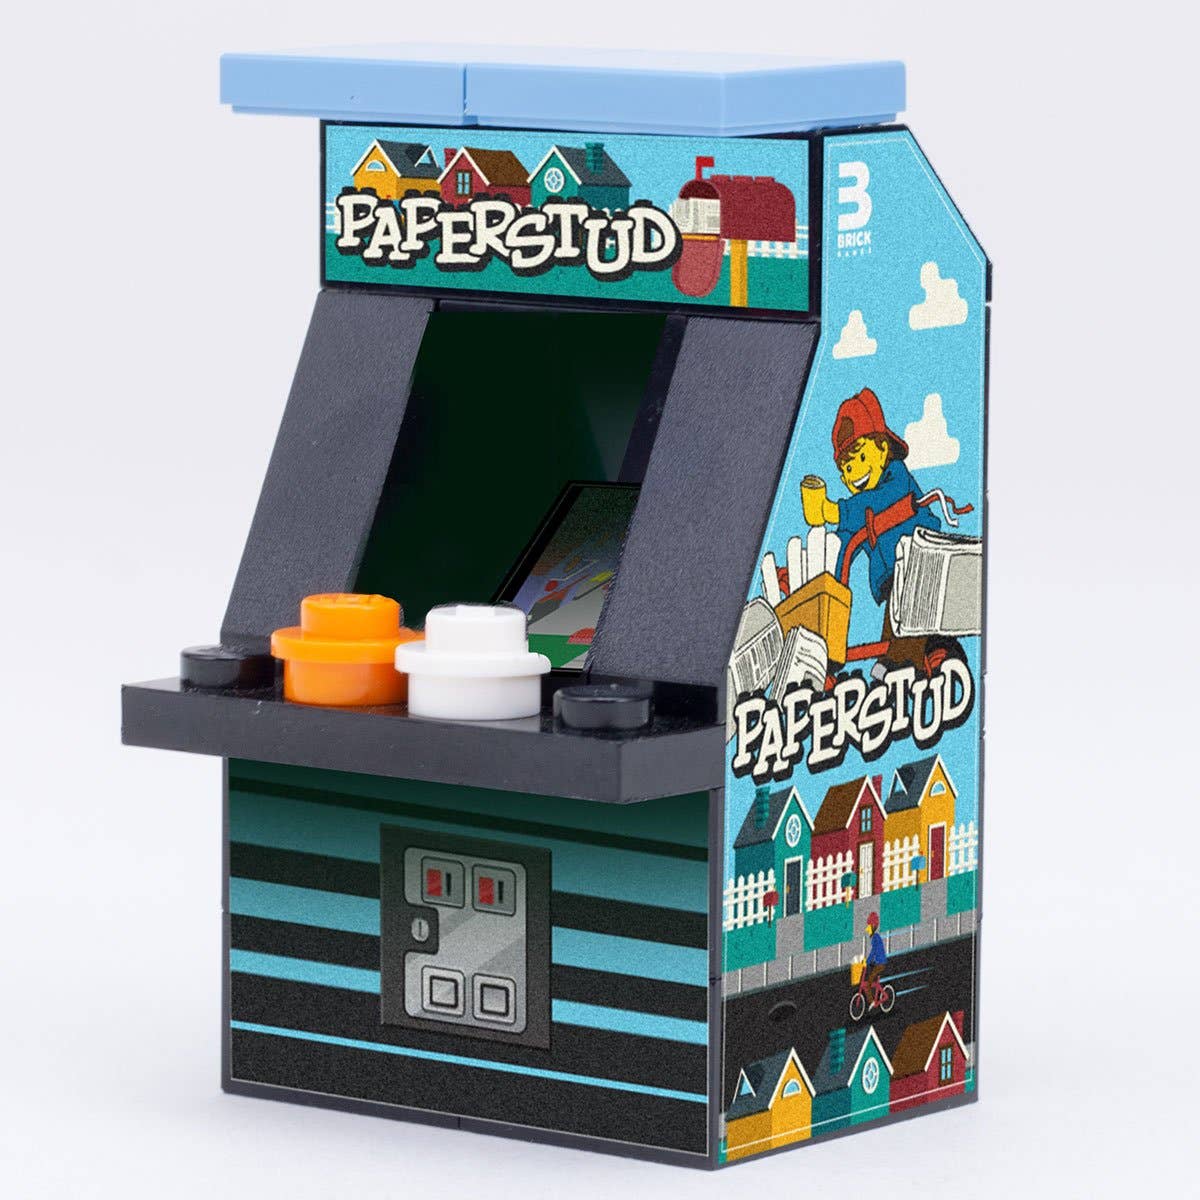 Paper Stud - Custom LEGO Classic Arcade Machine